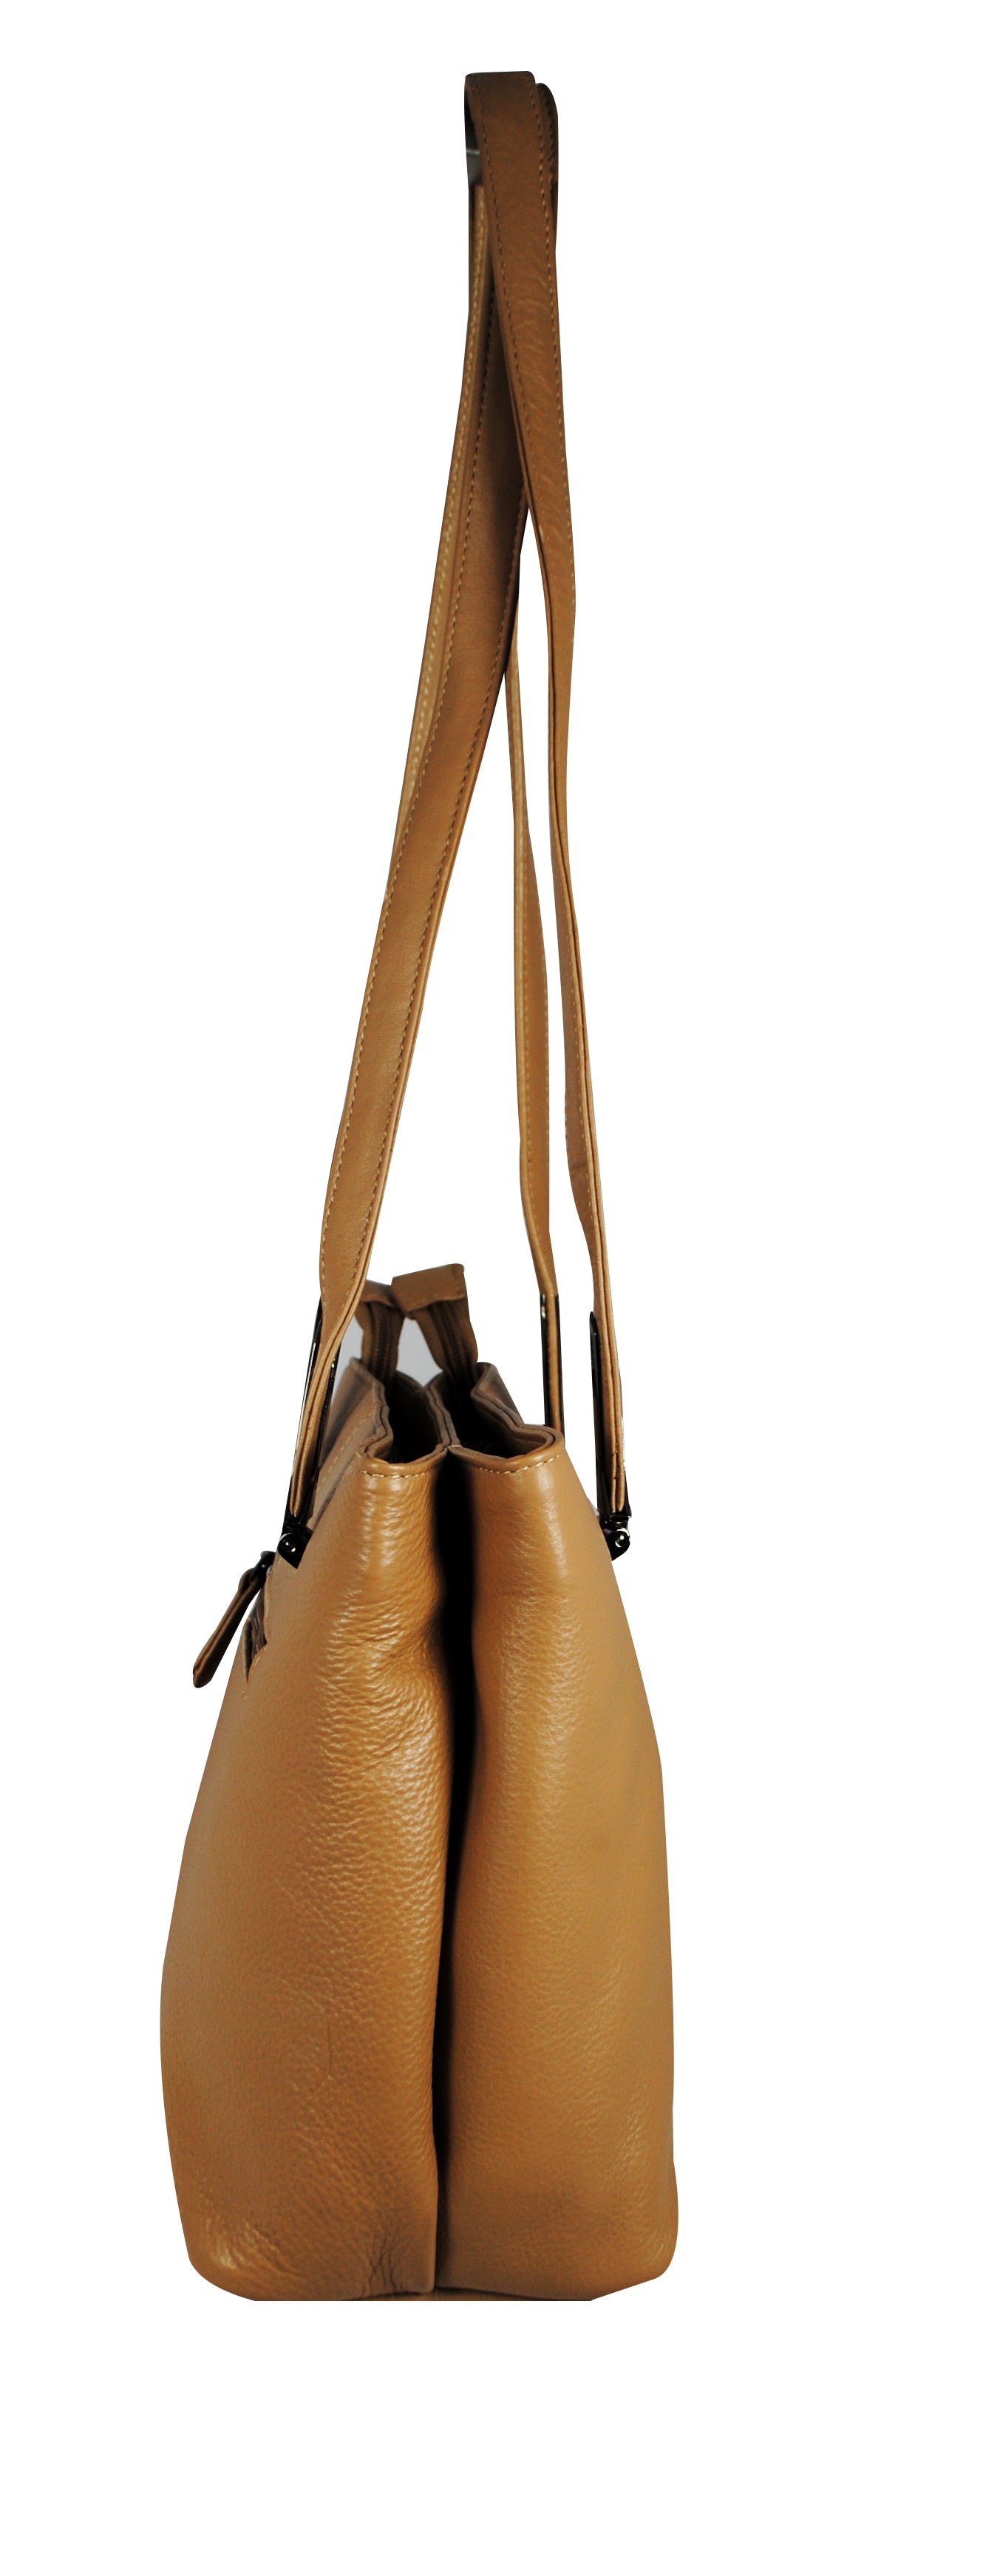 Calfnero Women's Genuine Leather Shoulder Bag (713929-Beige)